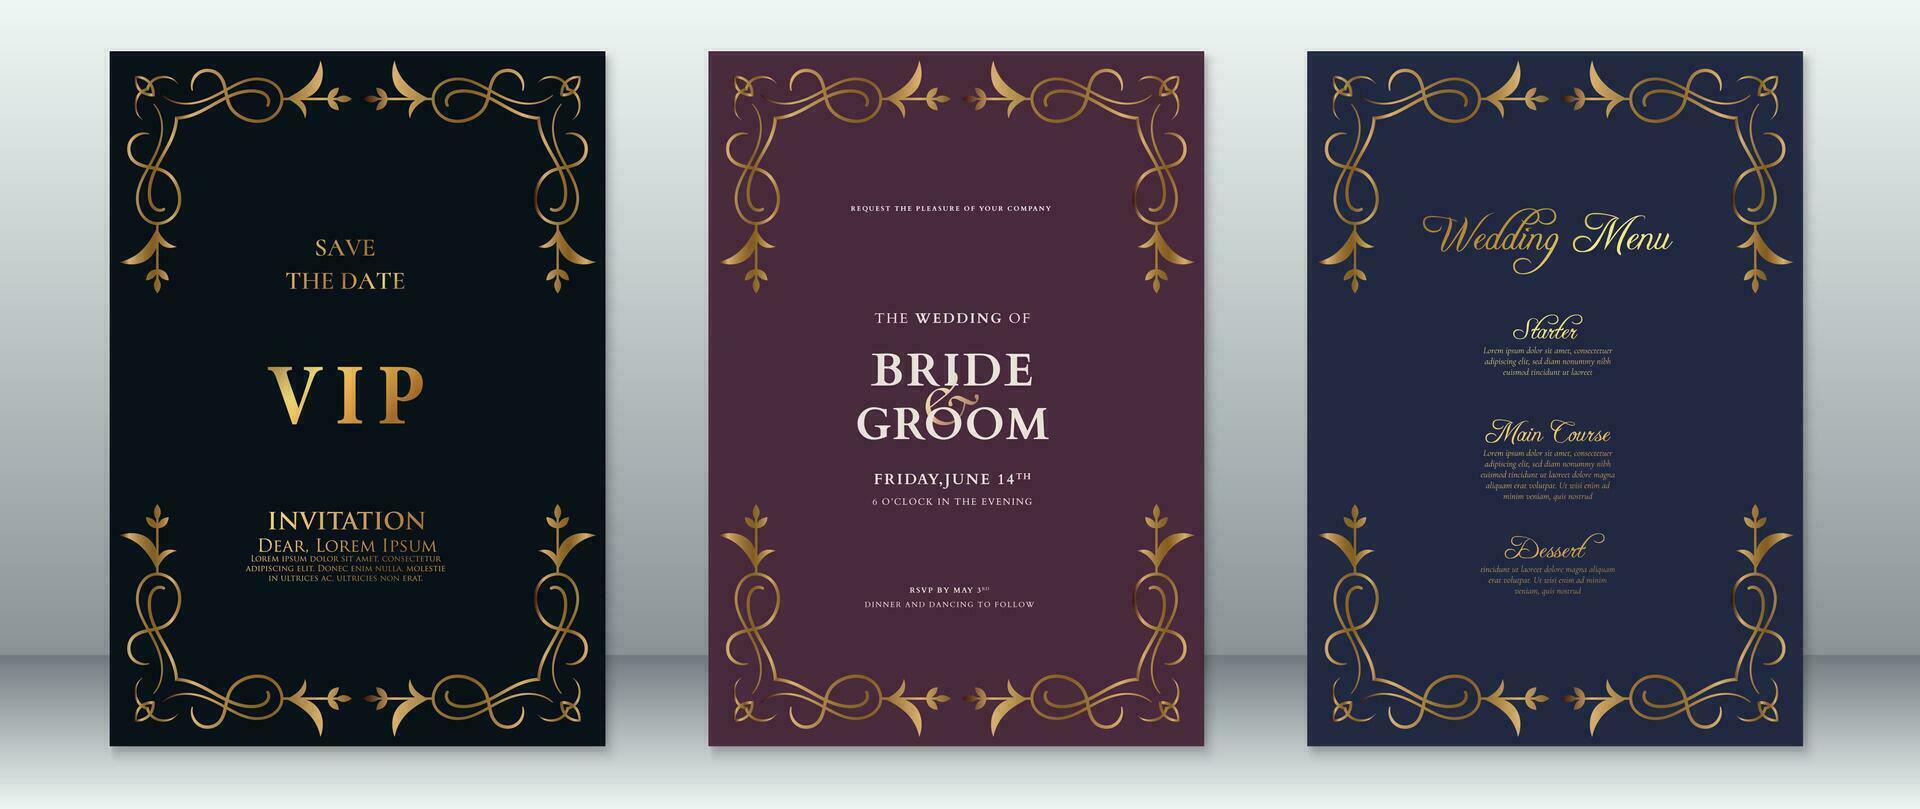 Luxury wedding invitation card template vintage design vector